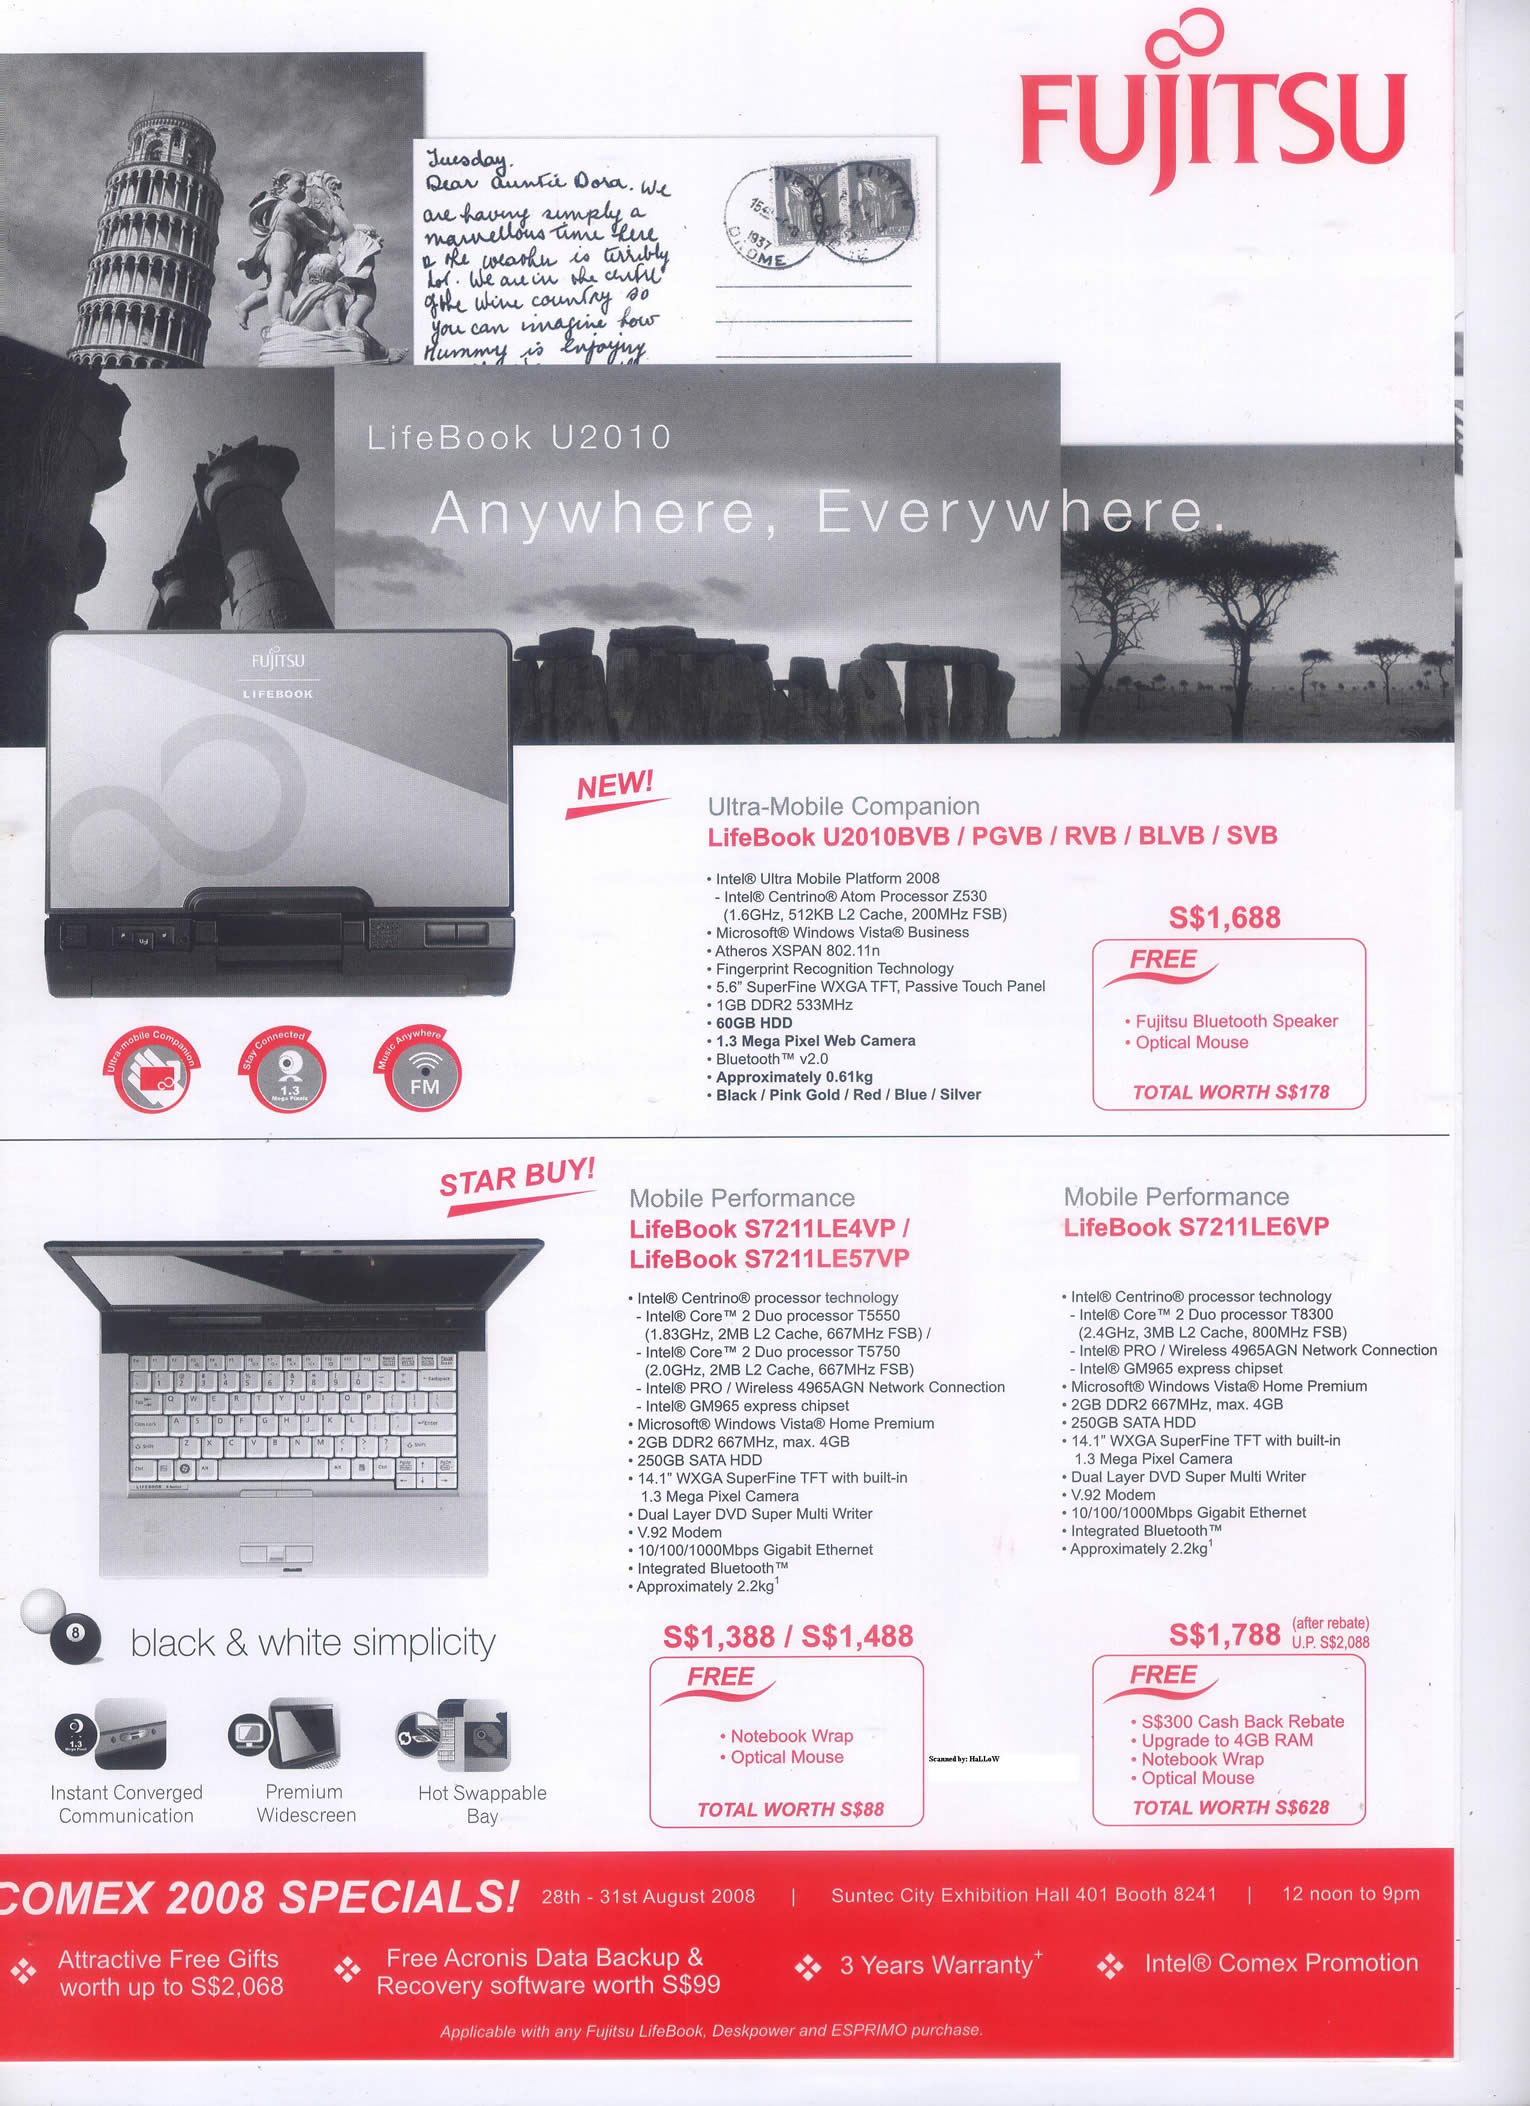 Comex 2008 price list image brochure of Fujitsu 1